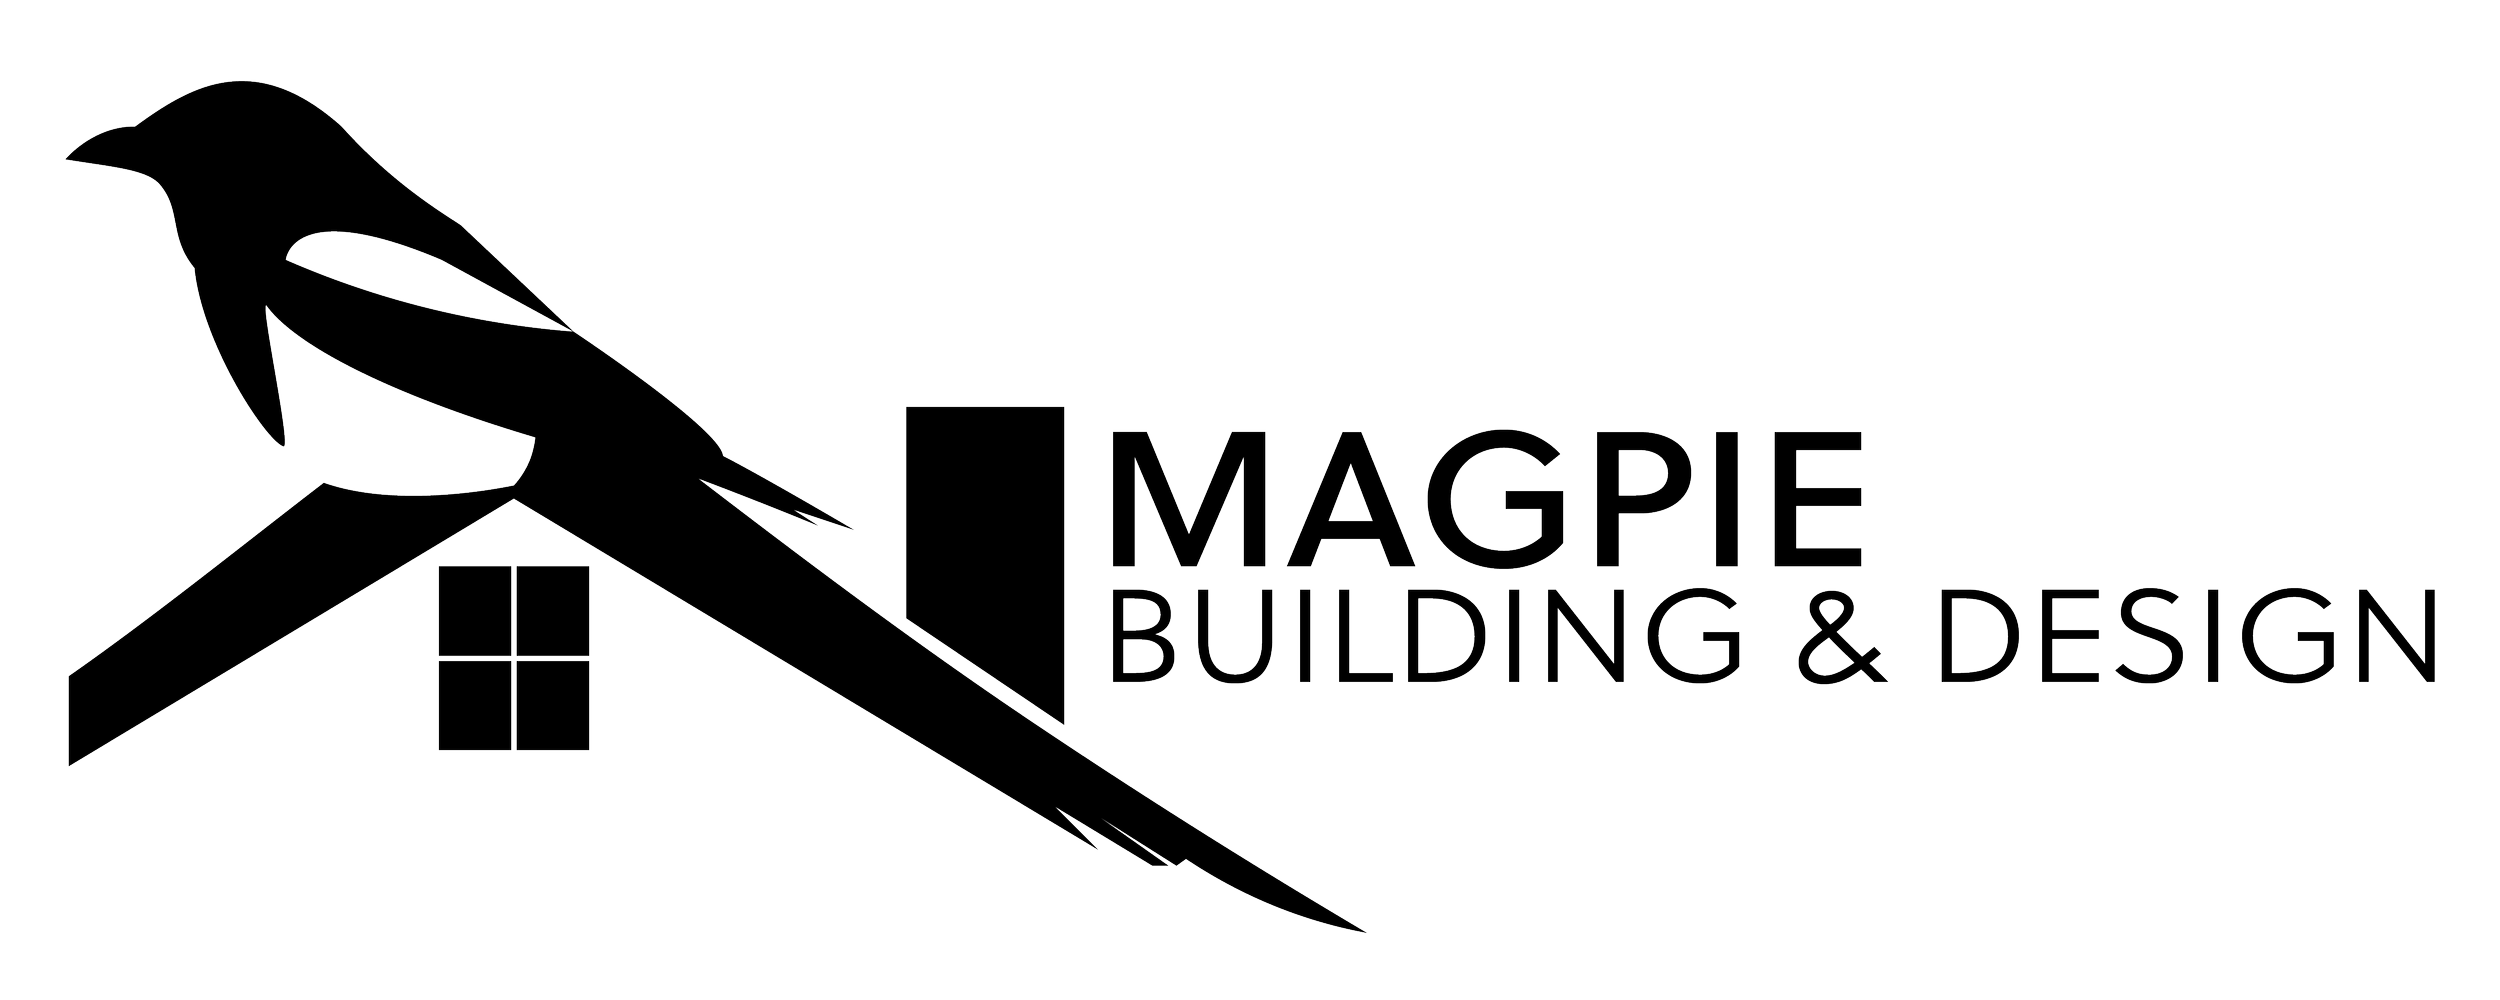 Magpie_Logo-LS.png